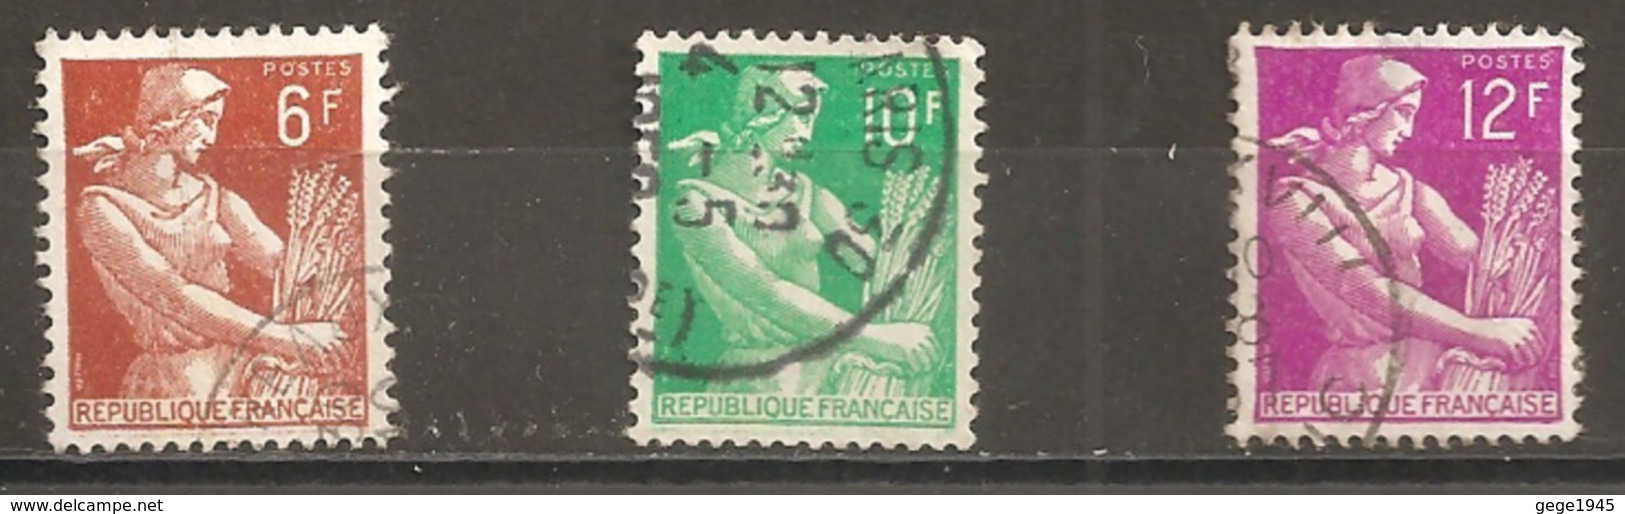 France 1957  Oblitéré   N° 1115  - 1115A  - 1116   -  Type Moissonneuse - 1957-1959 Oogst